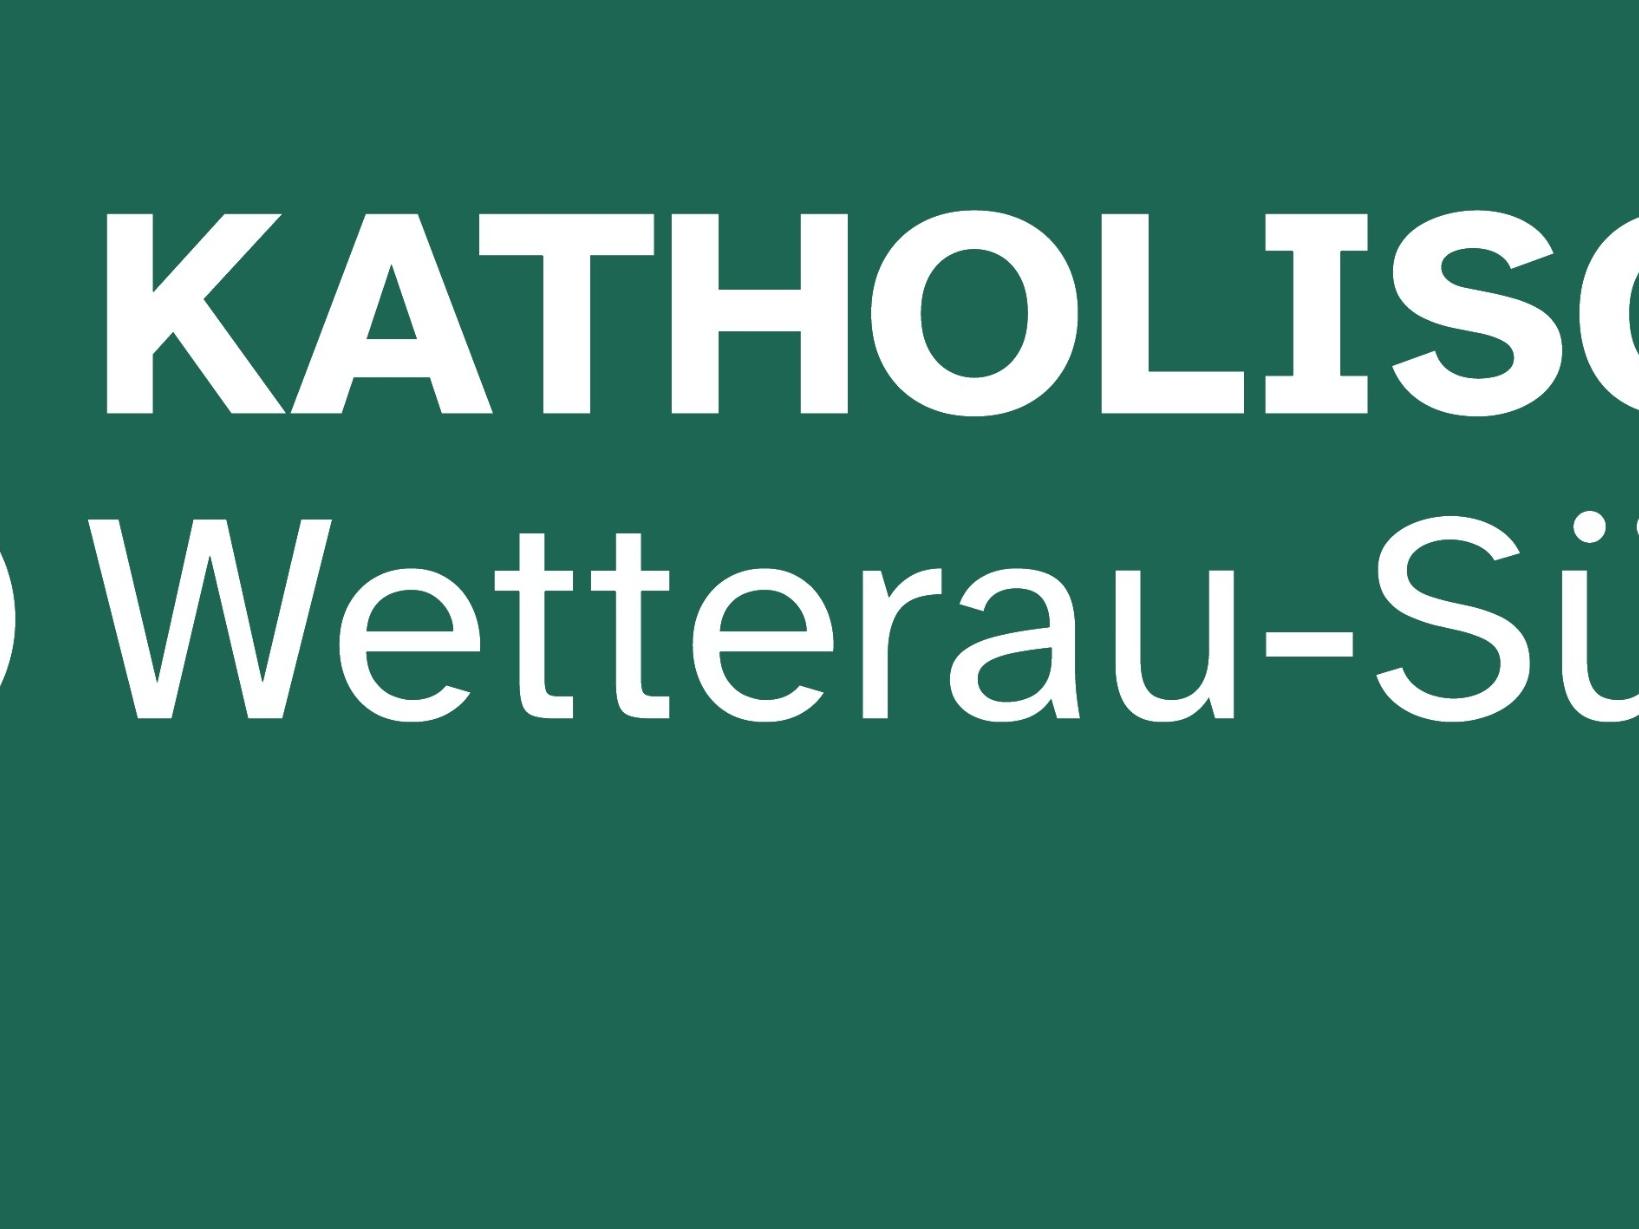 Logo Wetterau-Süd waldgrün